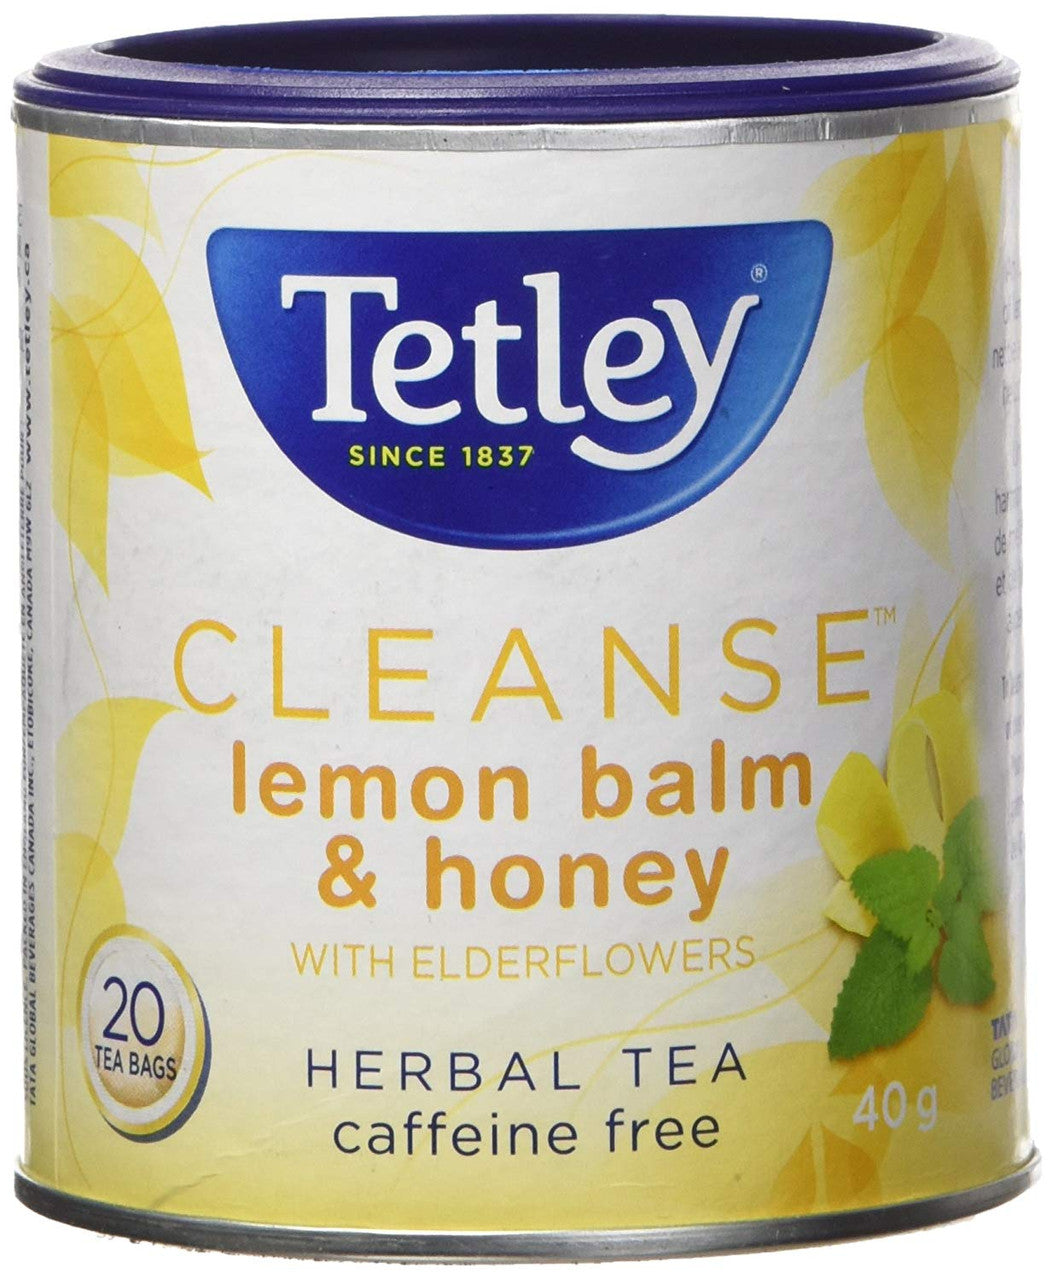 Tetley Tea Cleanse (Lemon Balm and Honey) Herbal Tea, 20ct, 40g/1.4oz. (Imported from Canada)